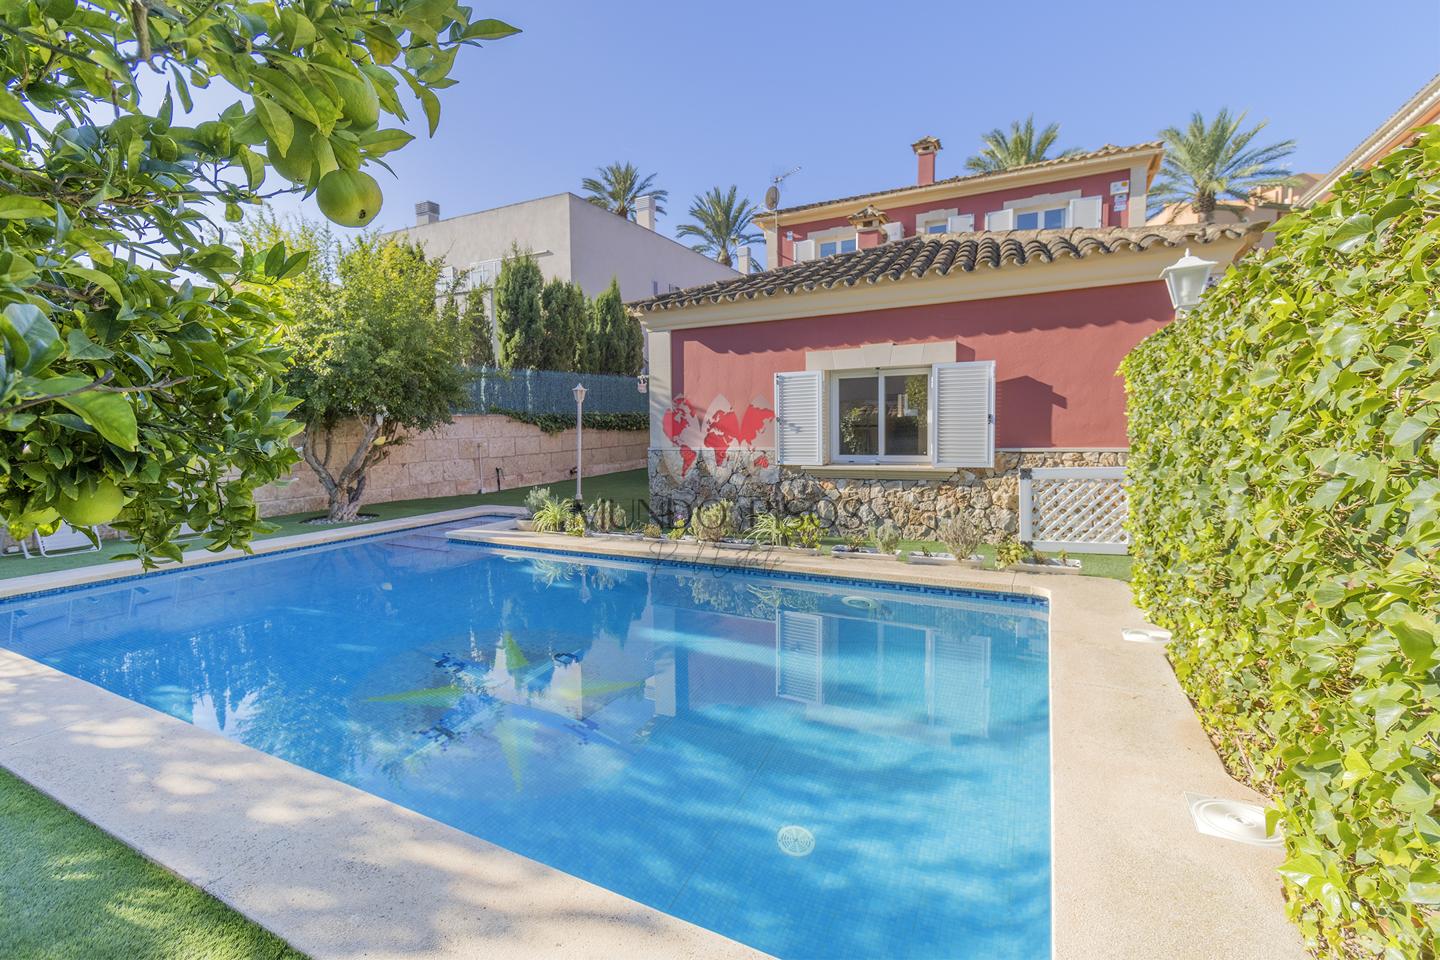 Detached villa with a swimming pool in Sometimes, Palma de Mallorca, Balearic